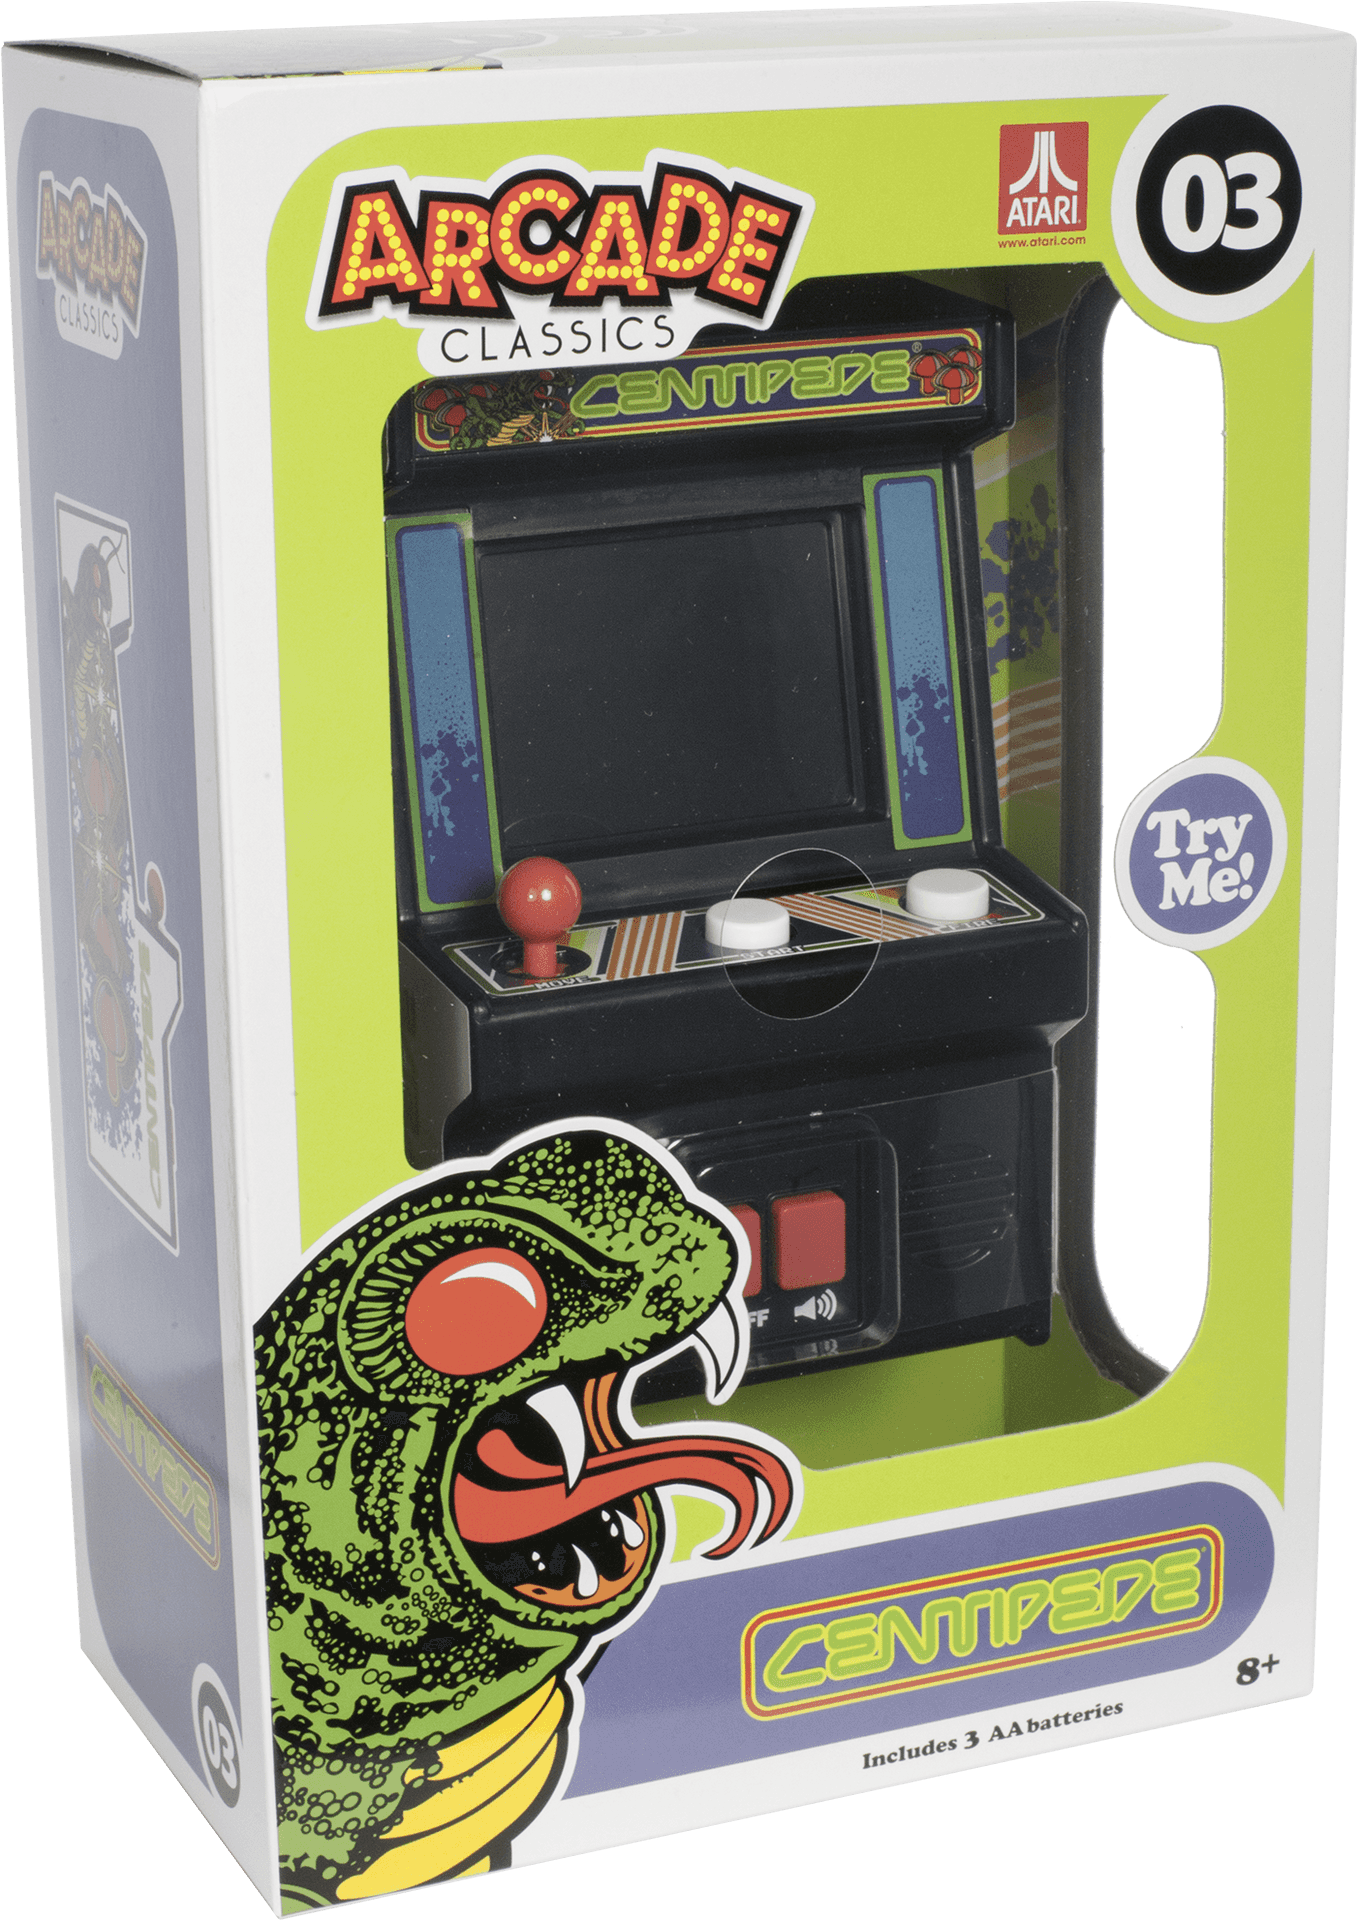 Arcade Classics Centipede Mini Cabinet Packaging PNG image